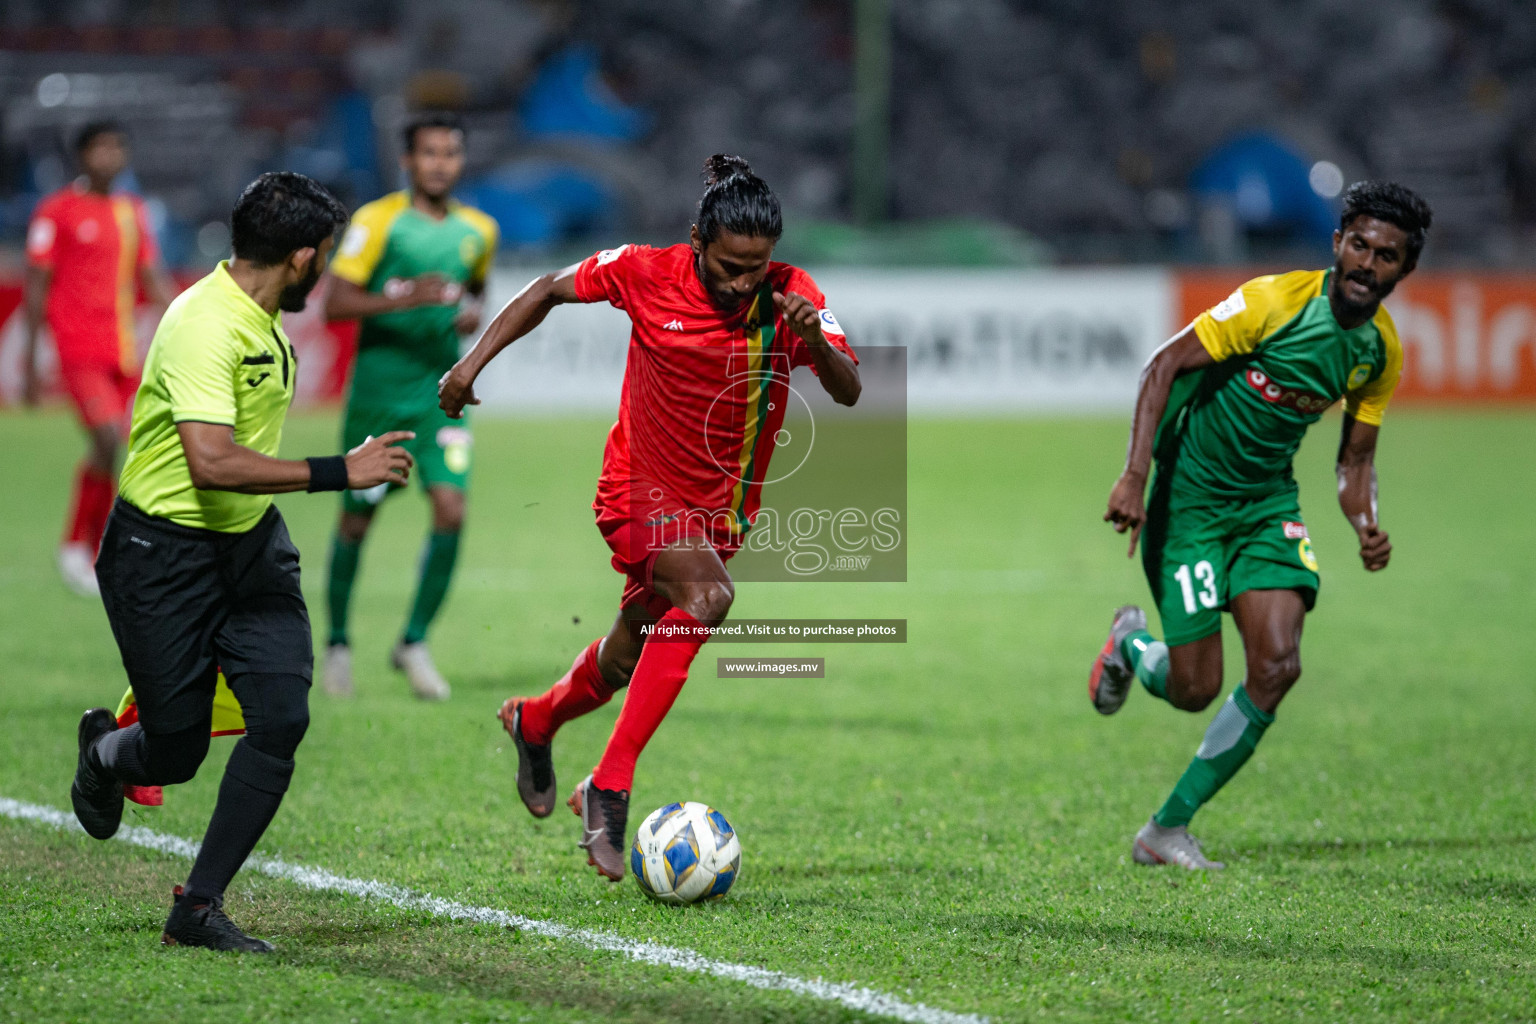 Maziya SRC vs Da Grande SC in Dhiraagu Dhivehi Premier League 2020-21 on 03 January 2021 held in Male', Maldives